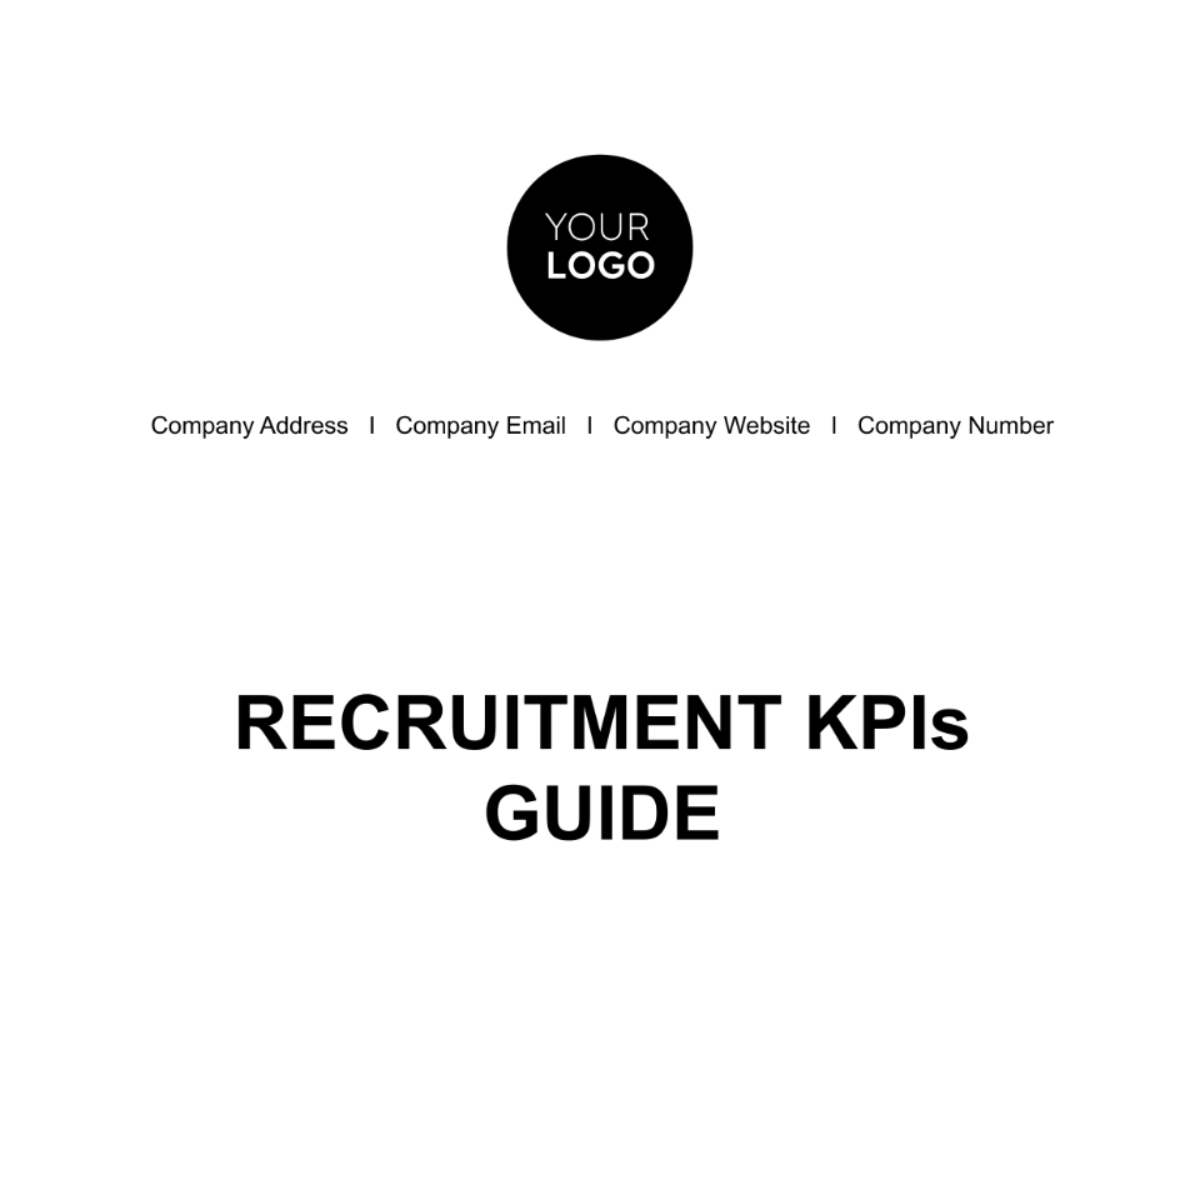 Recruitment KPIs Guide HR Template